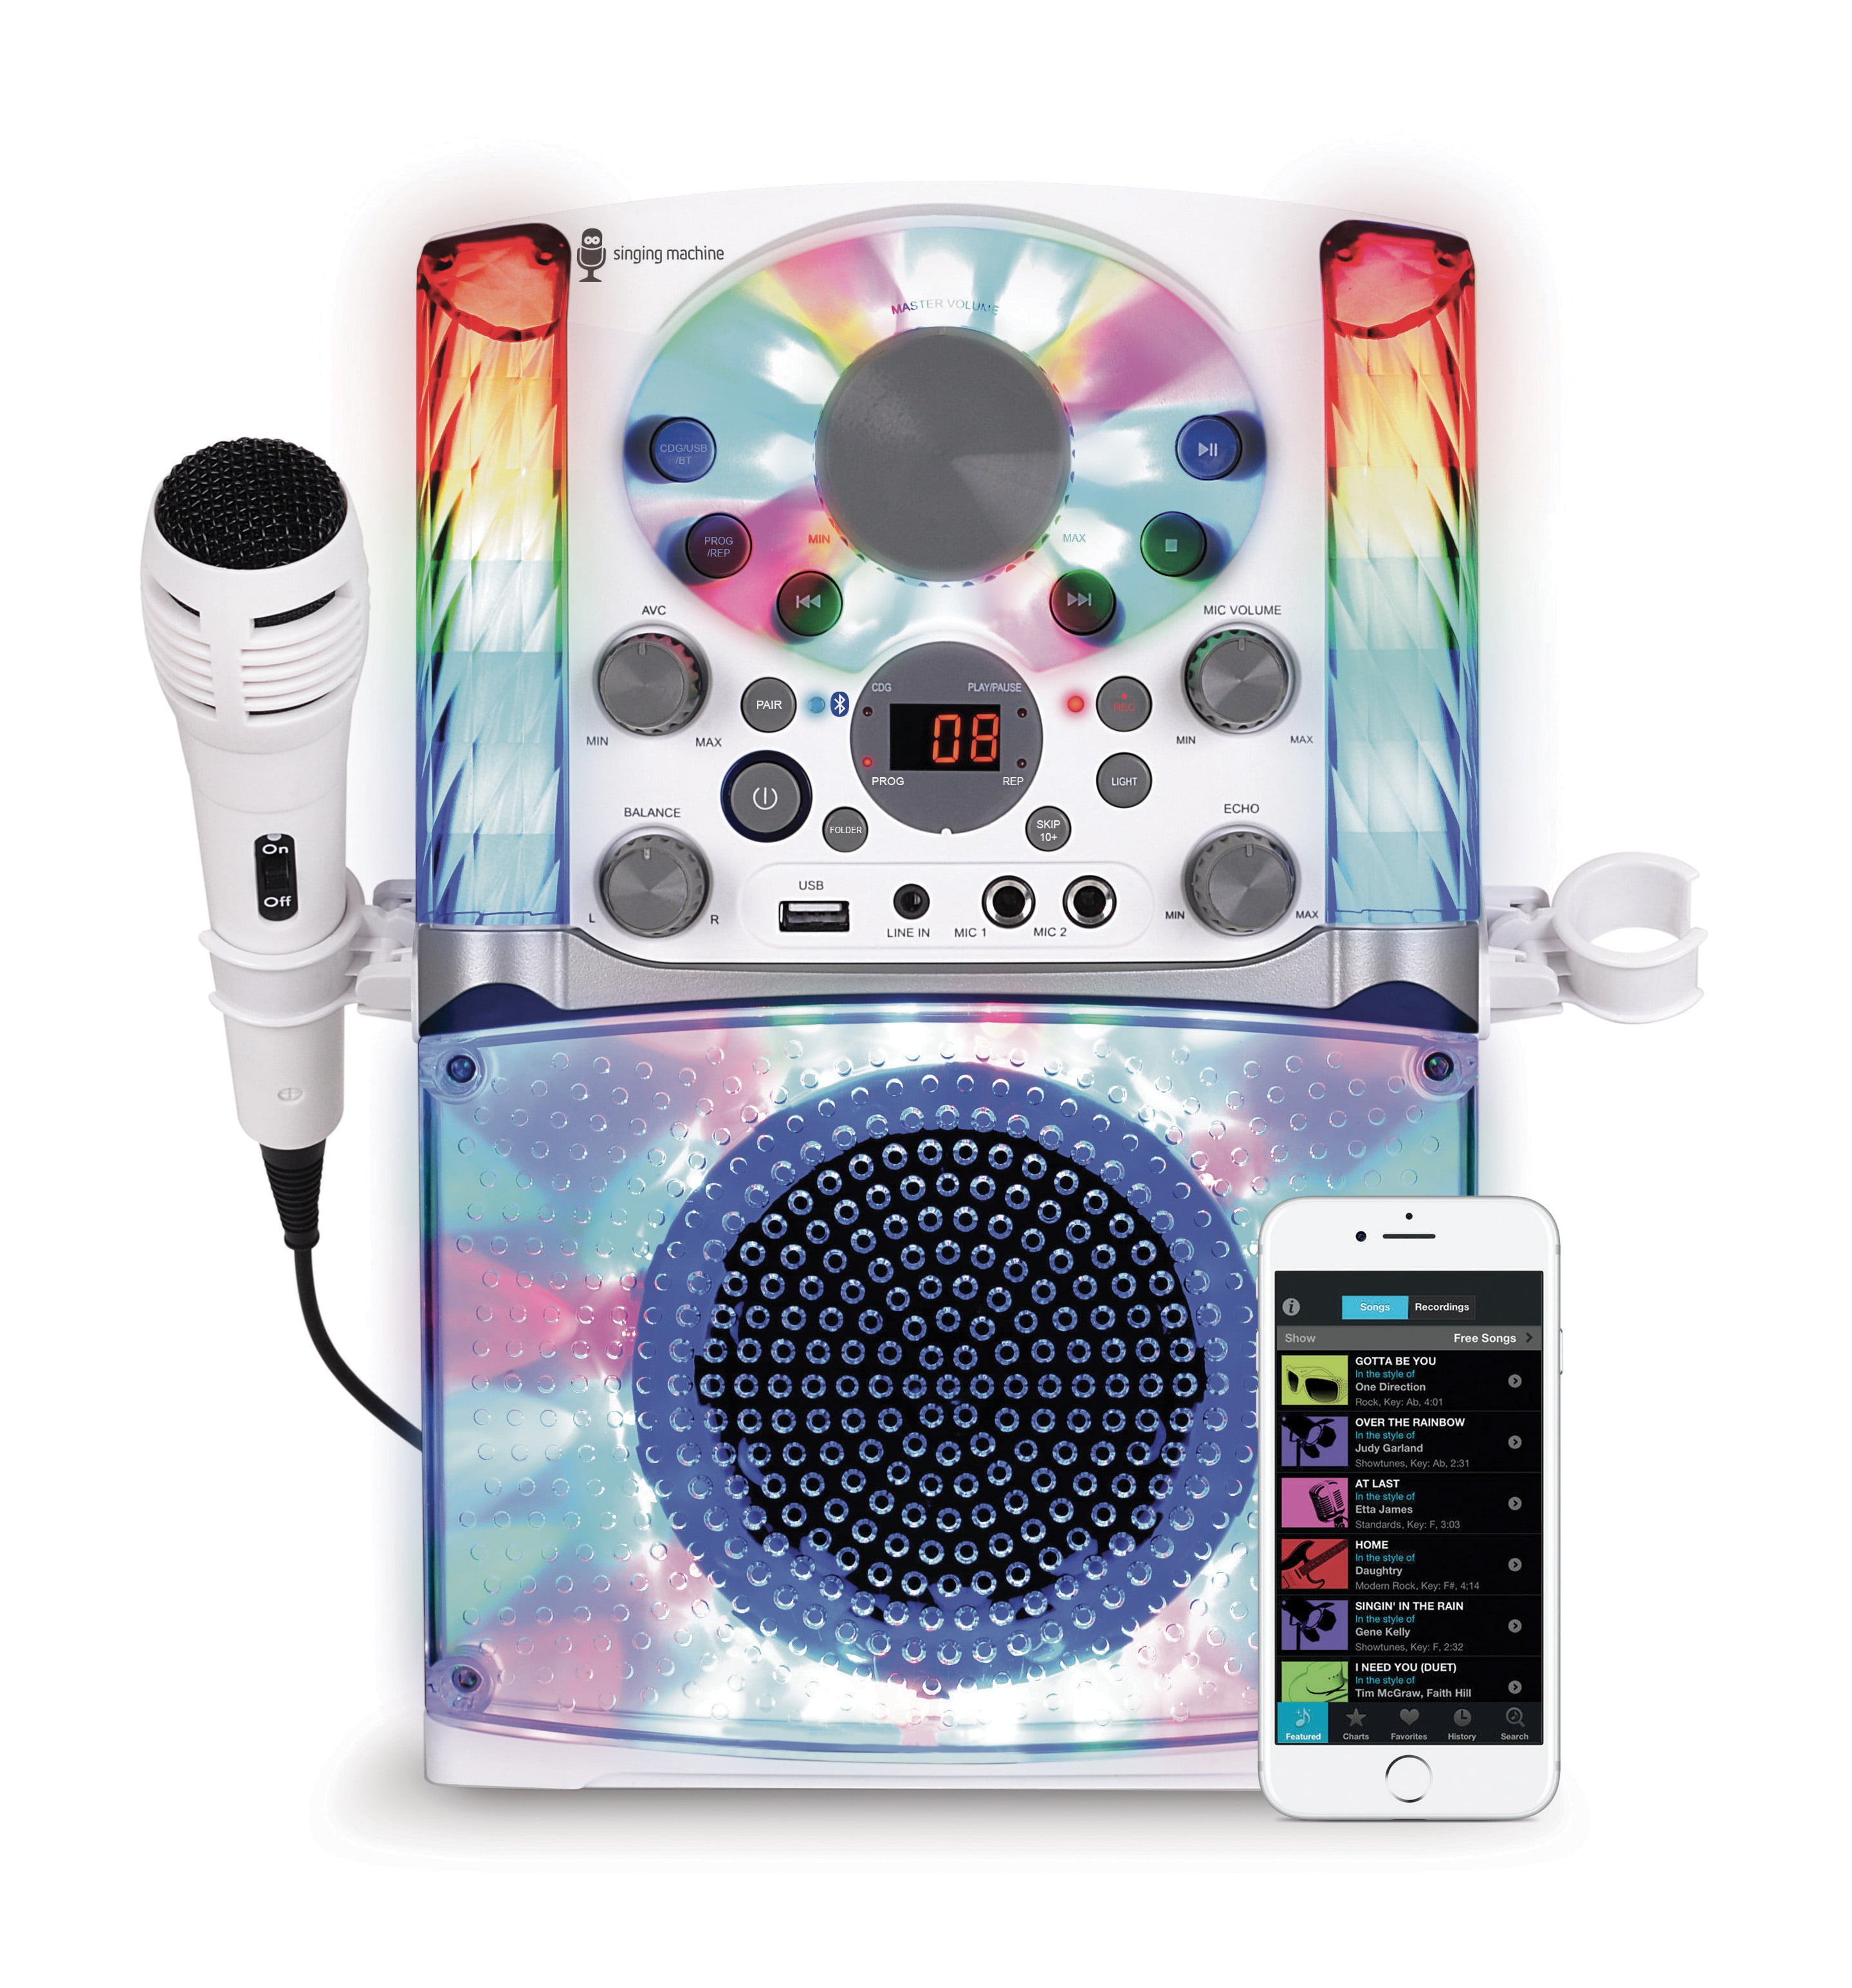 Equipo Karaoke Bluetooth Singing Machine Glow Sml2200 